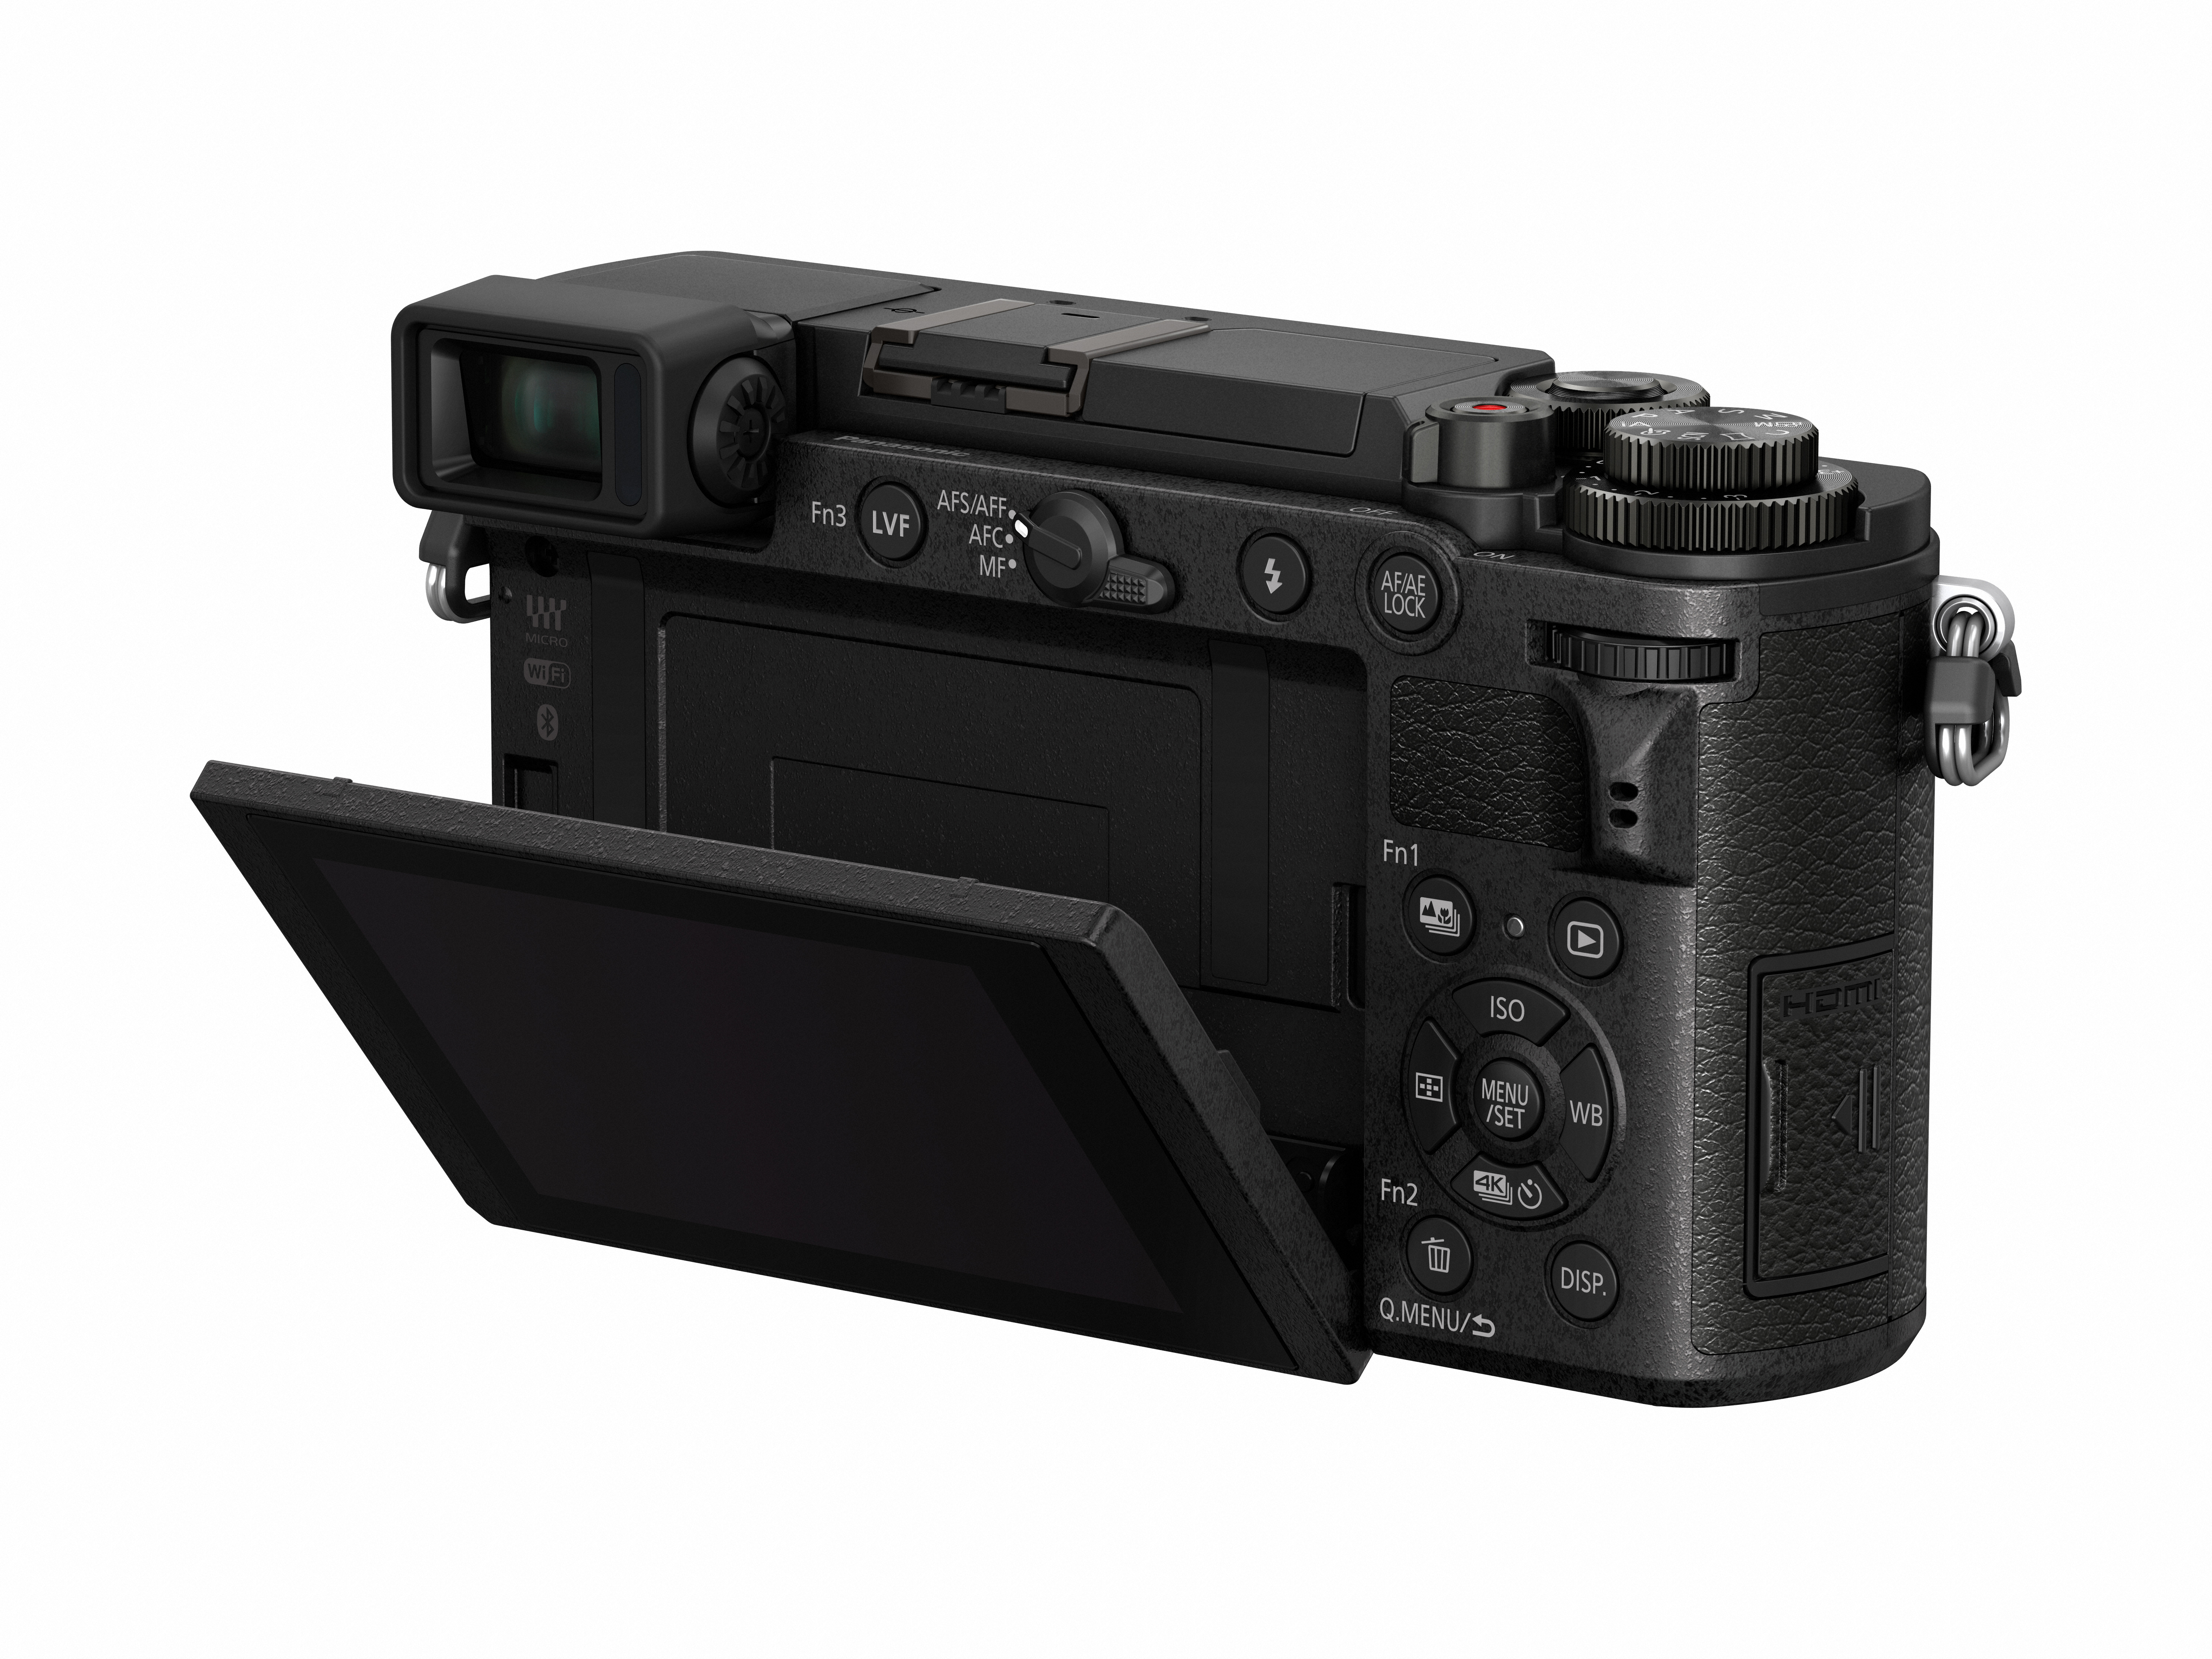 PANASONIC Display, Kit Systemkamera mit 7,5 cm 14-140 Objektiv GX9 mm, WLAN LUMIX